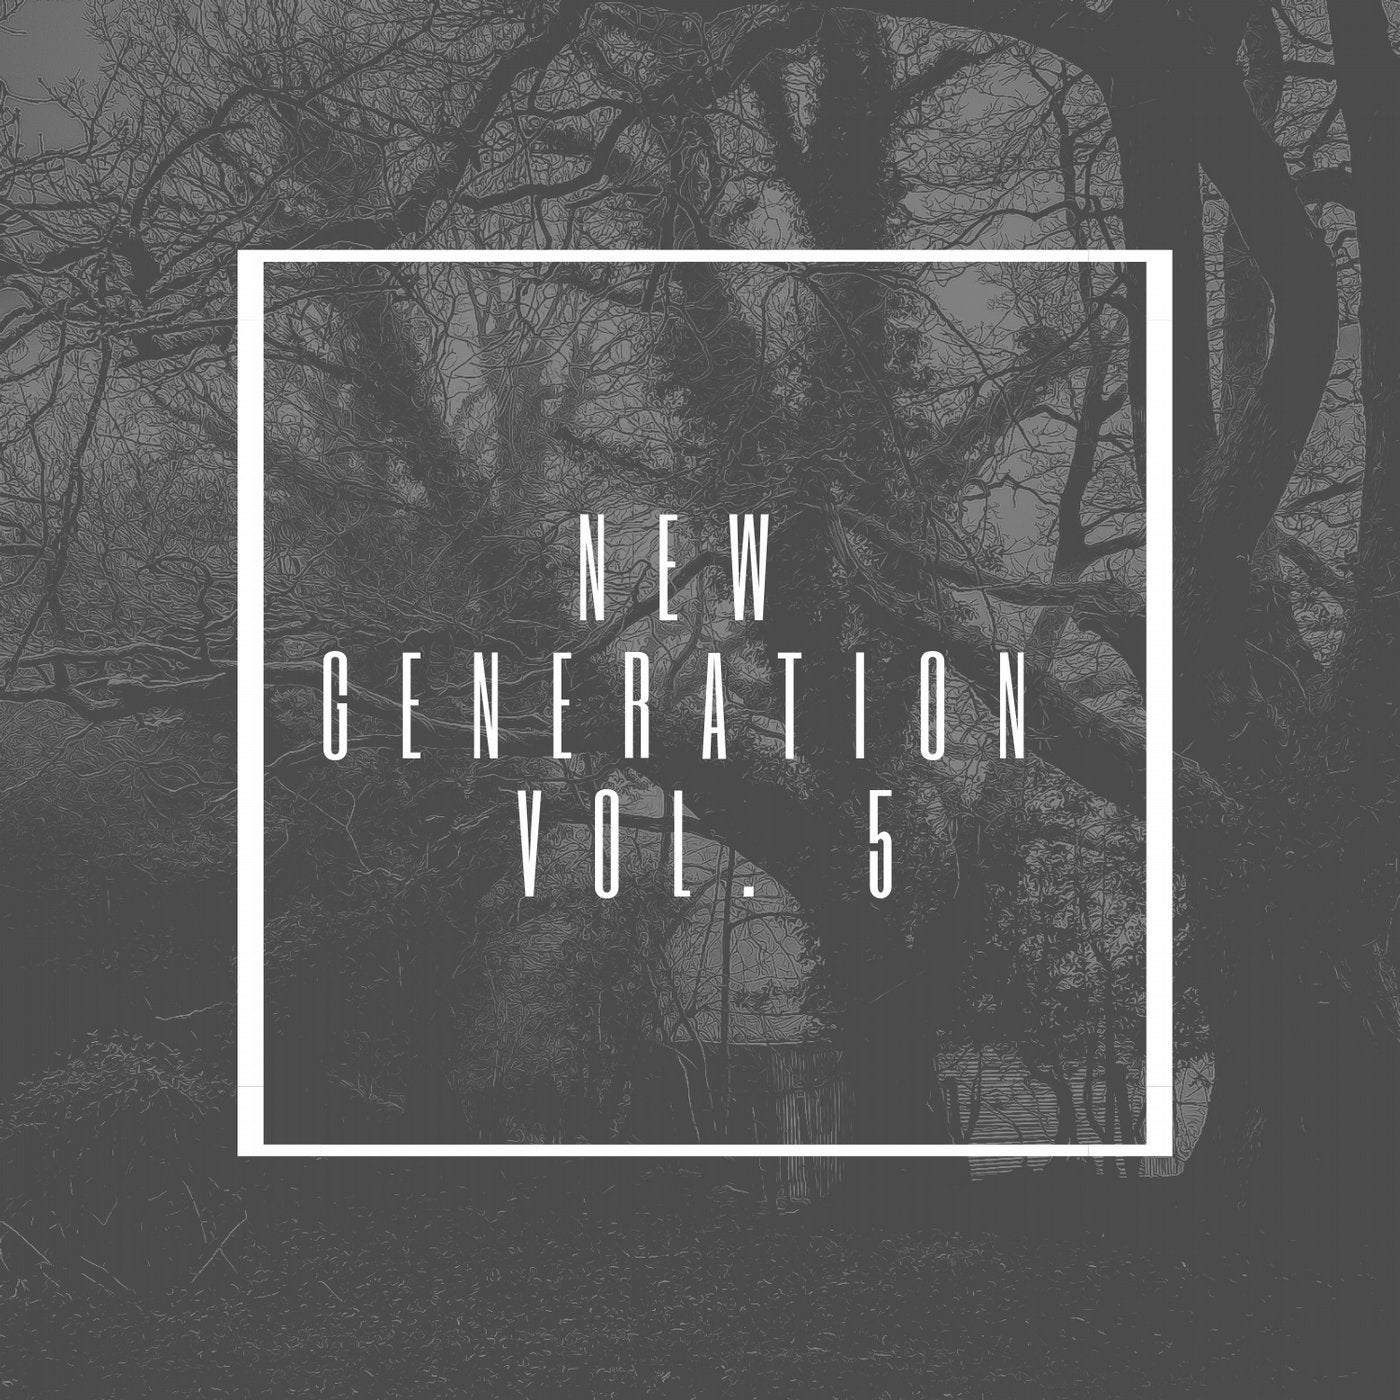 New Generation Vol. 5